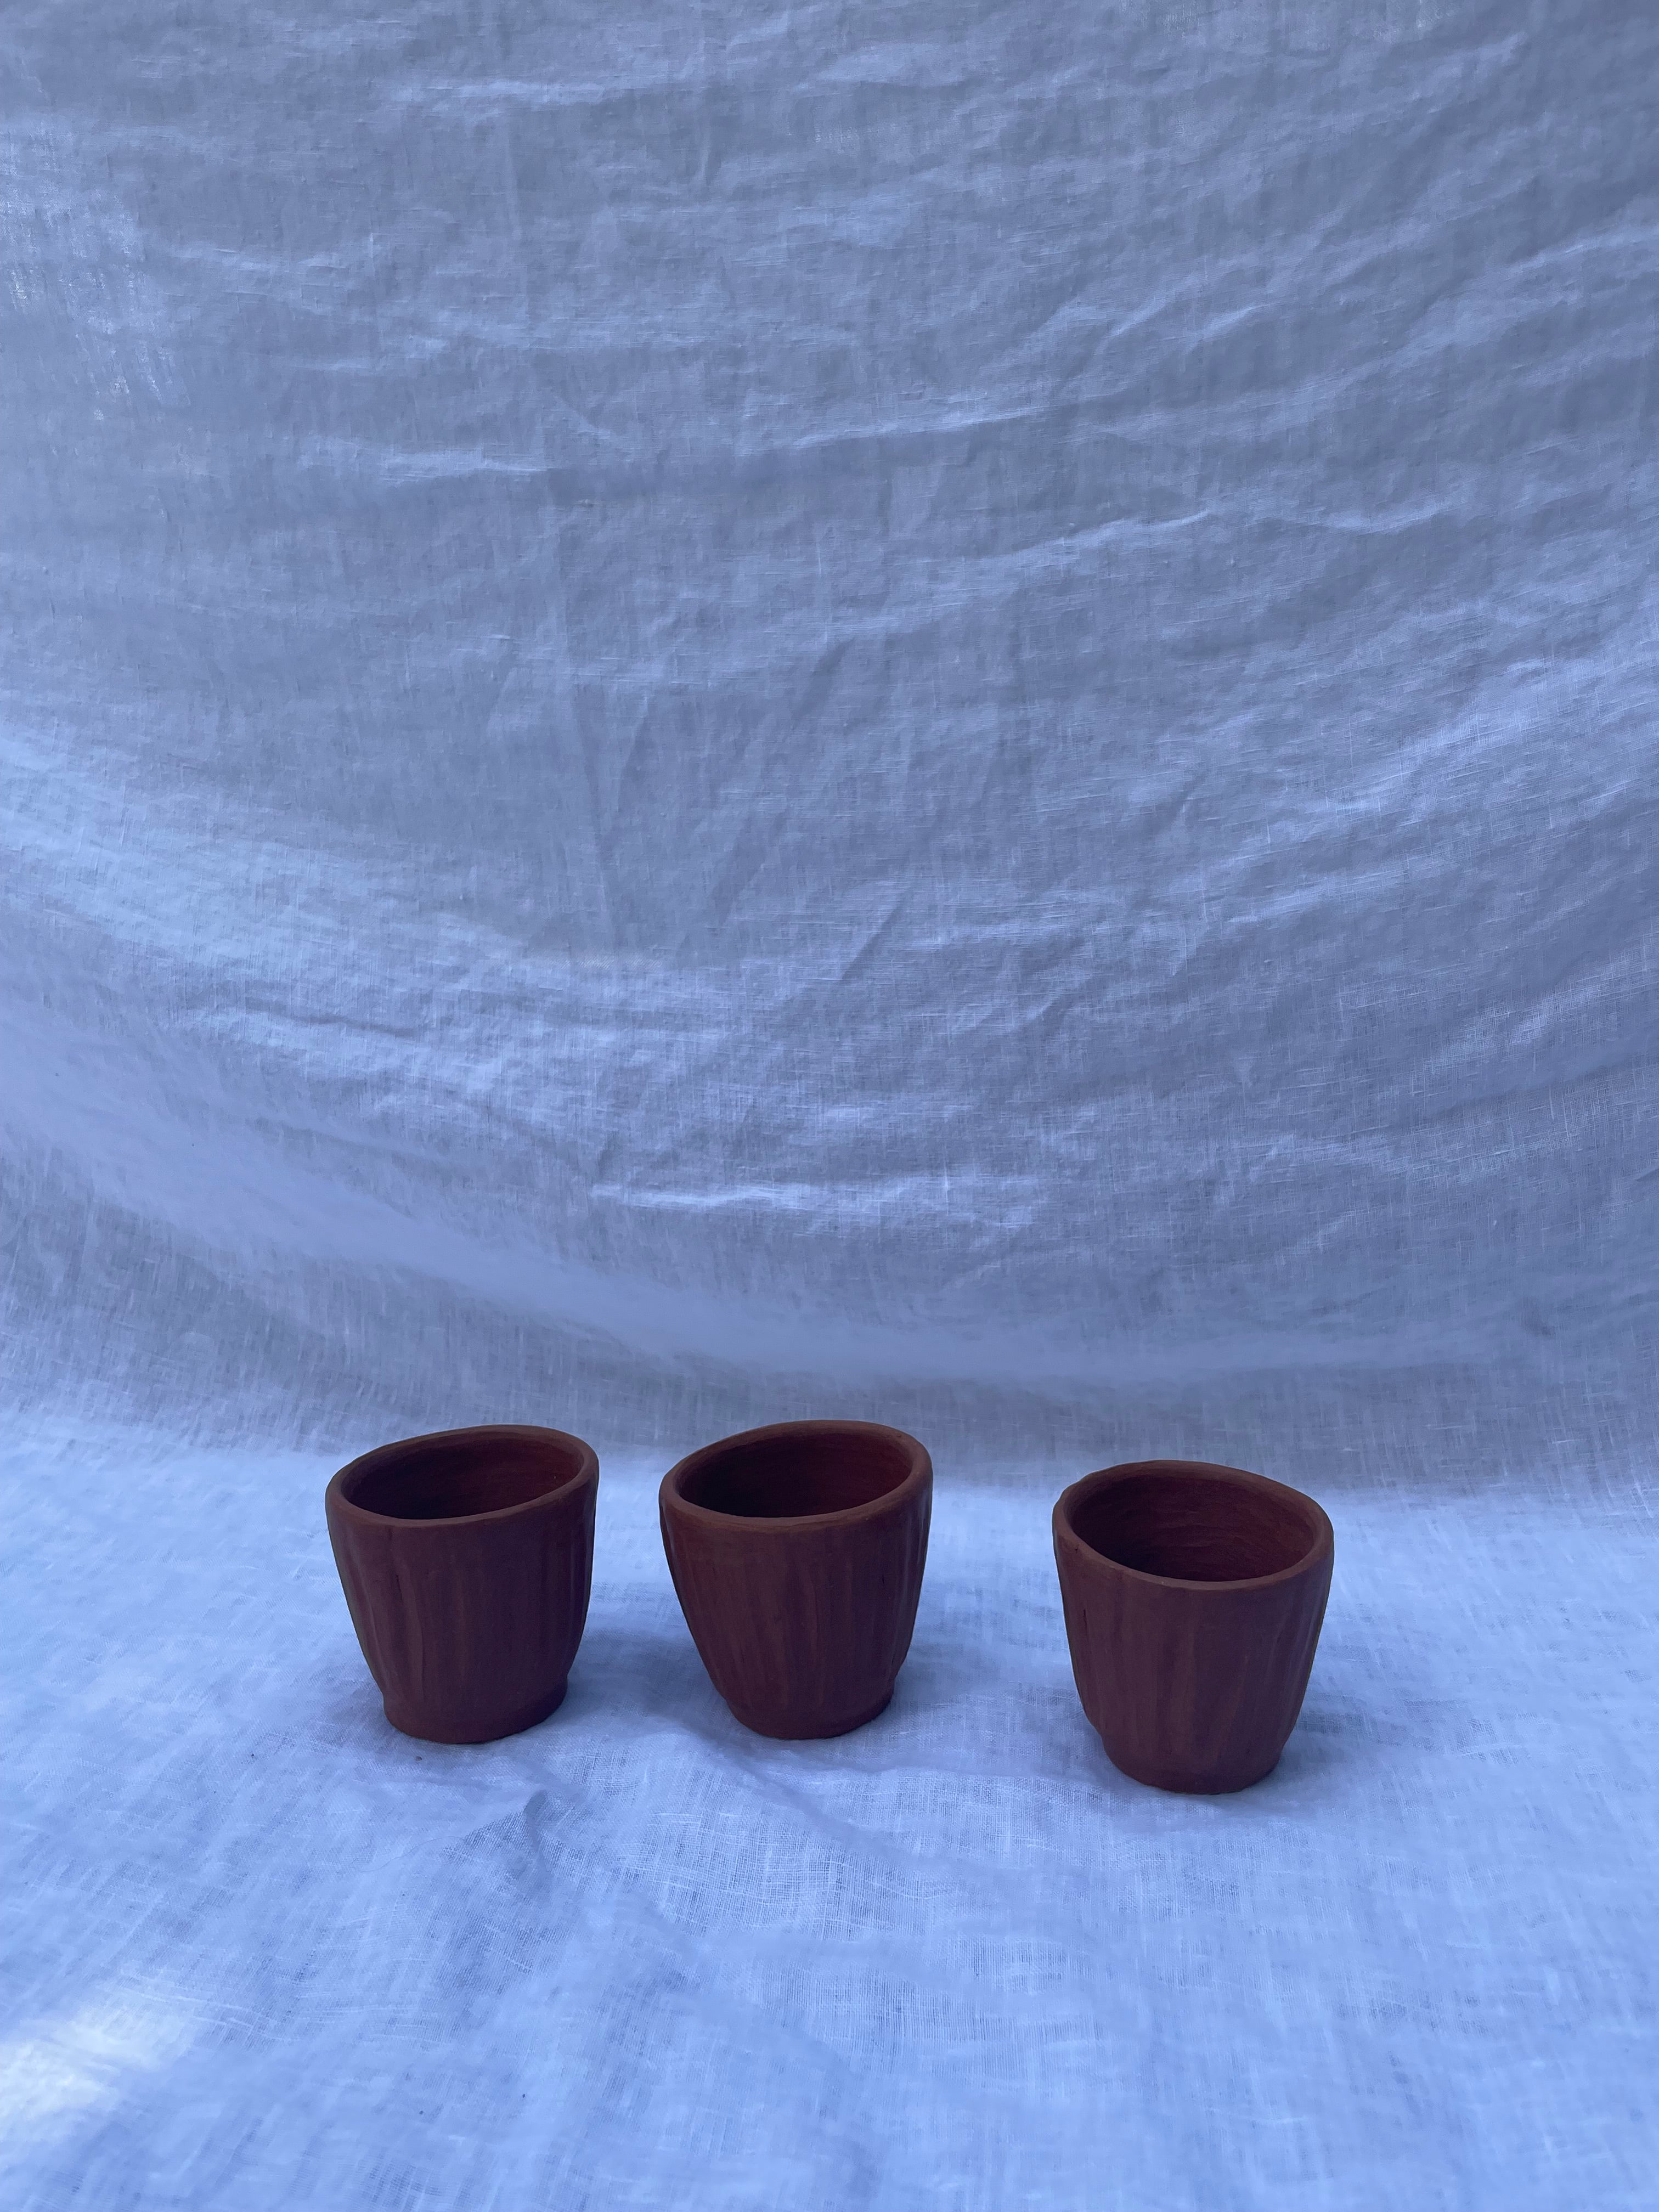 Red Clay Pinstripe Espresso Cups- Oaxaca